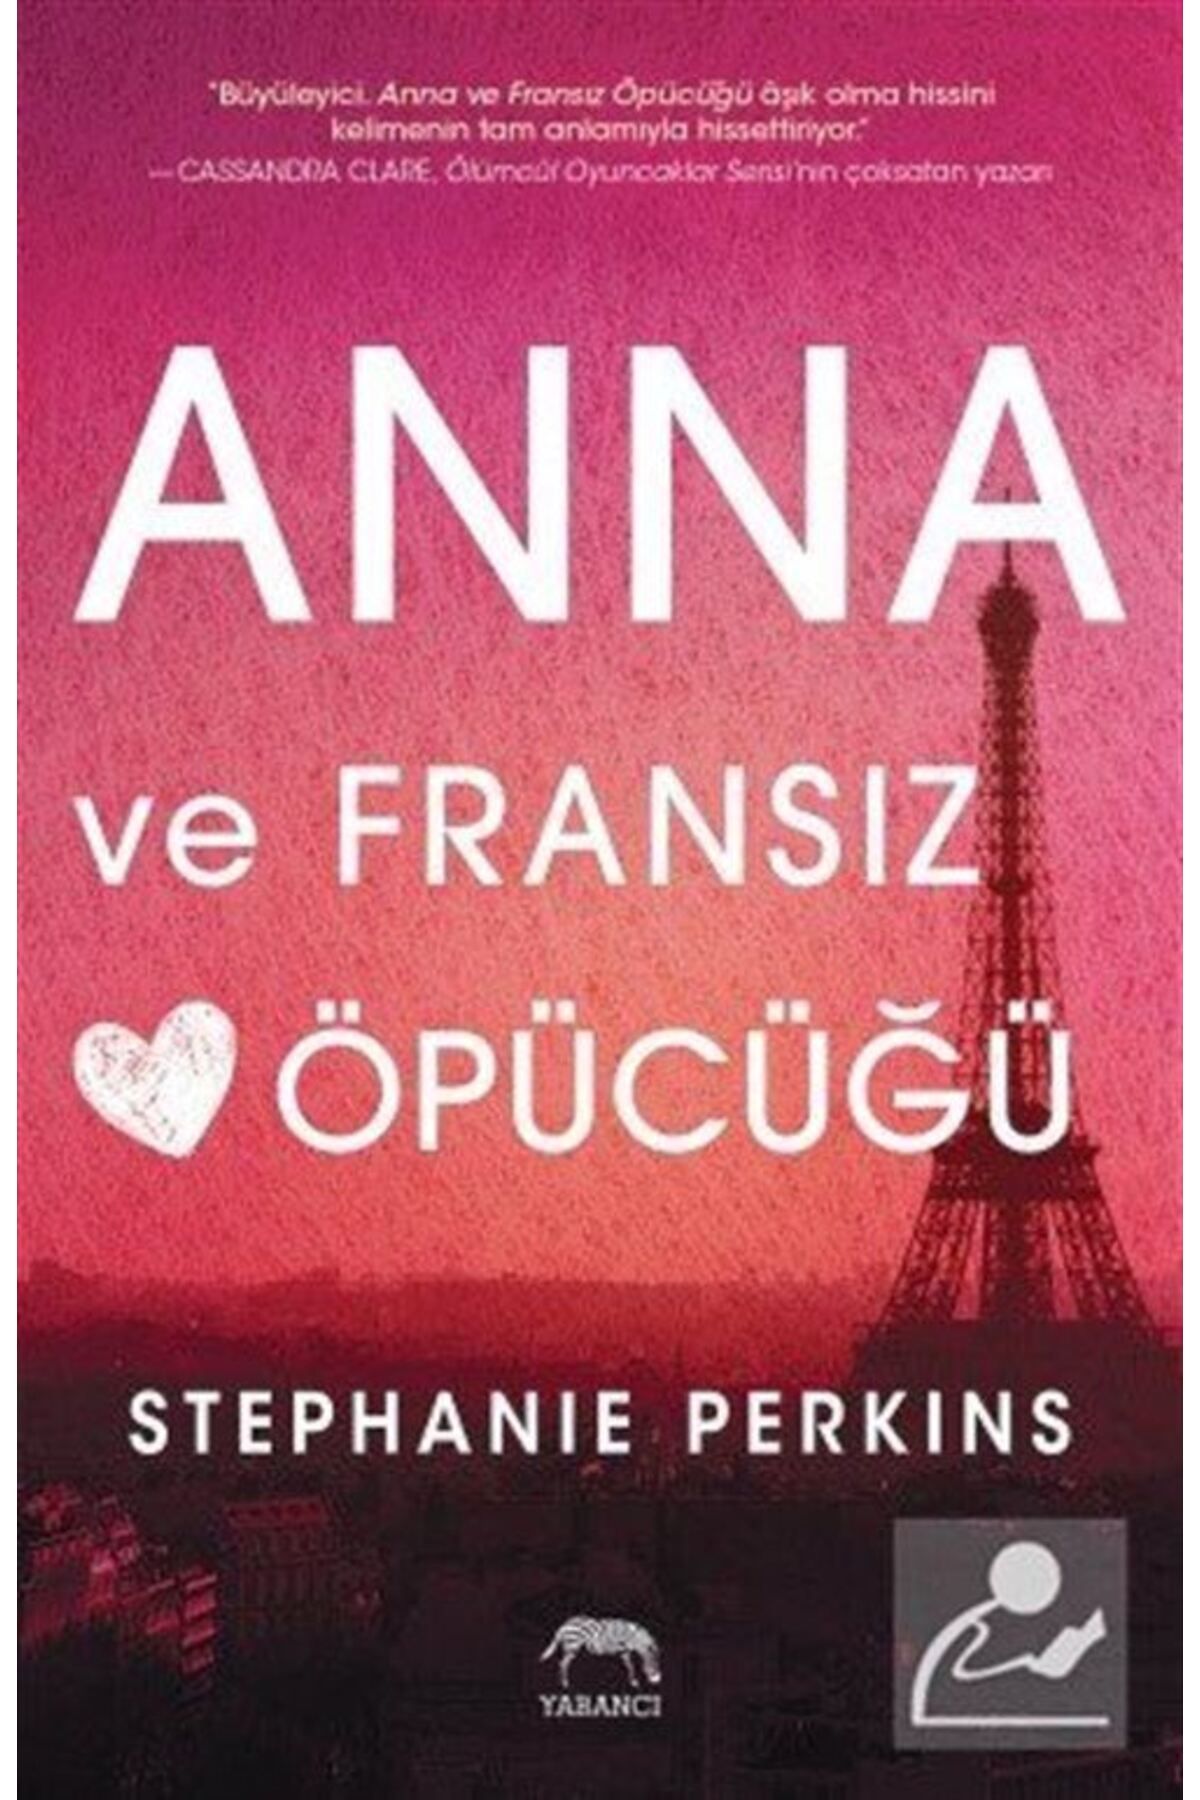 Yabancı Yayınları Anna ve Fransız Öpücüğü Ciltli